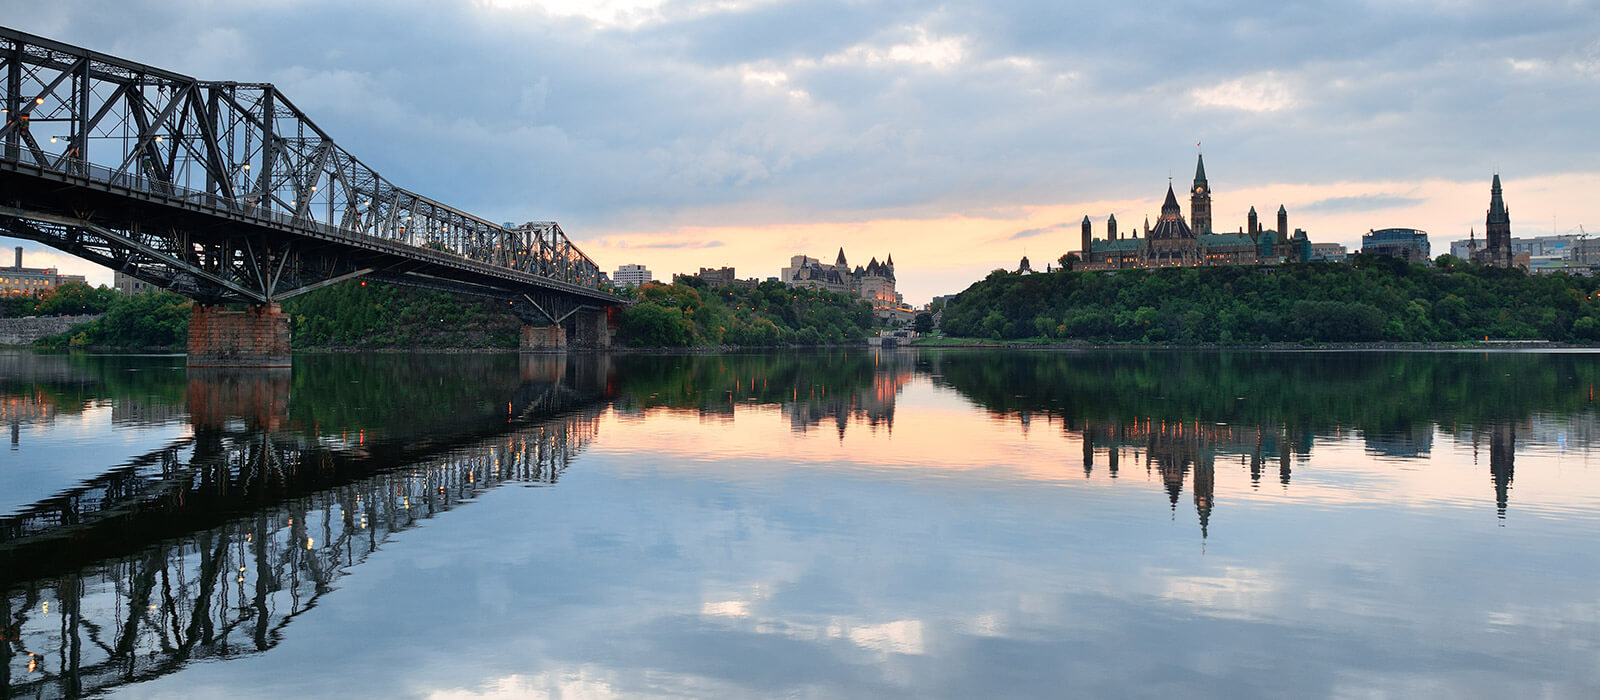 Slideshow Image - Ottawa, Ontario Skyline